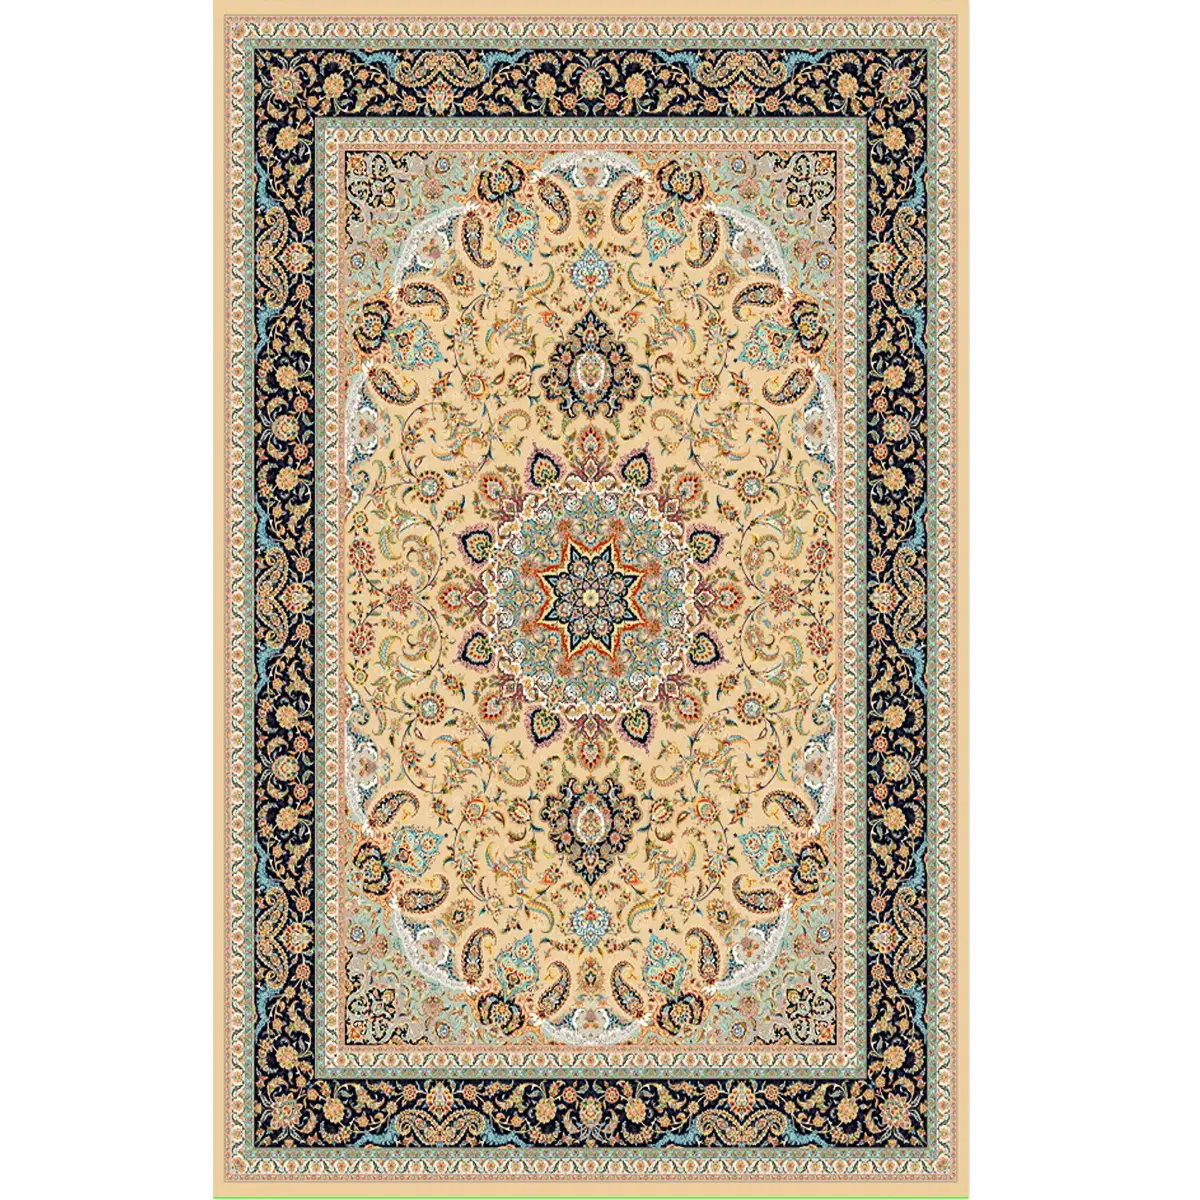 Turquie Maroc saint tapis salon canapé tapis grand tapis de prière anti-fouling et antidérapant